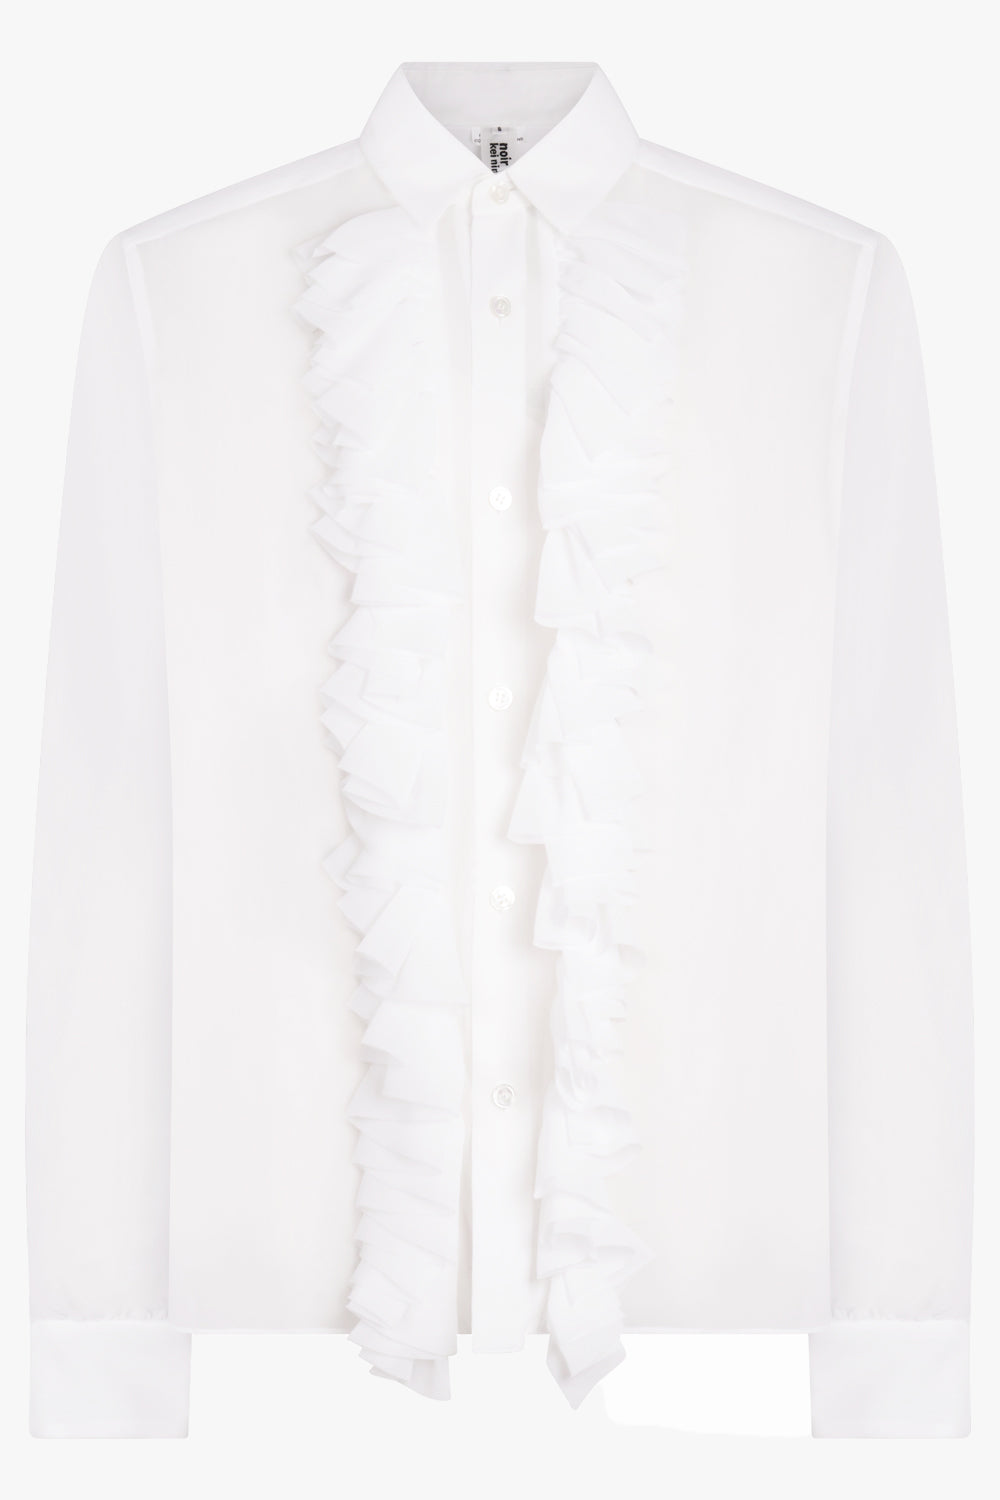 NOIR KEI NINOMIYA RTW Sheer Ruffle Detail L/S Shirt | White